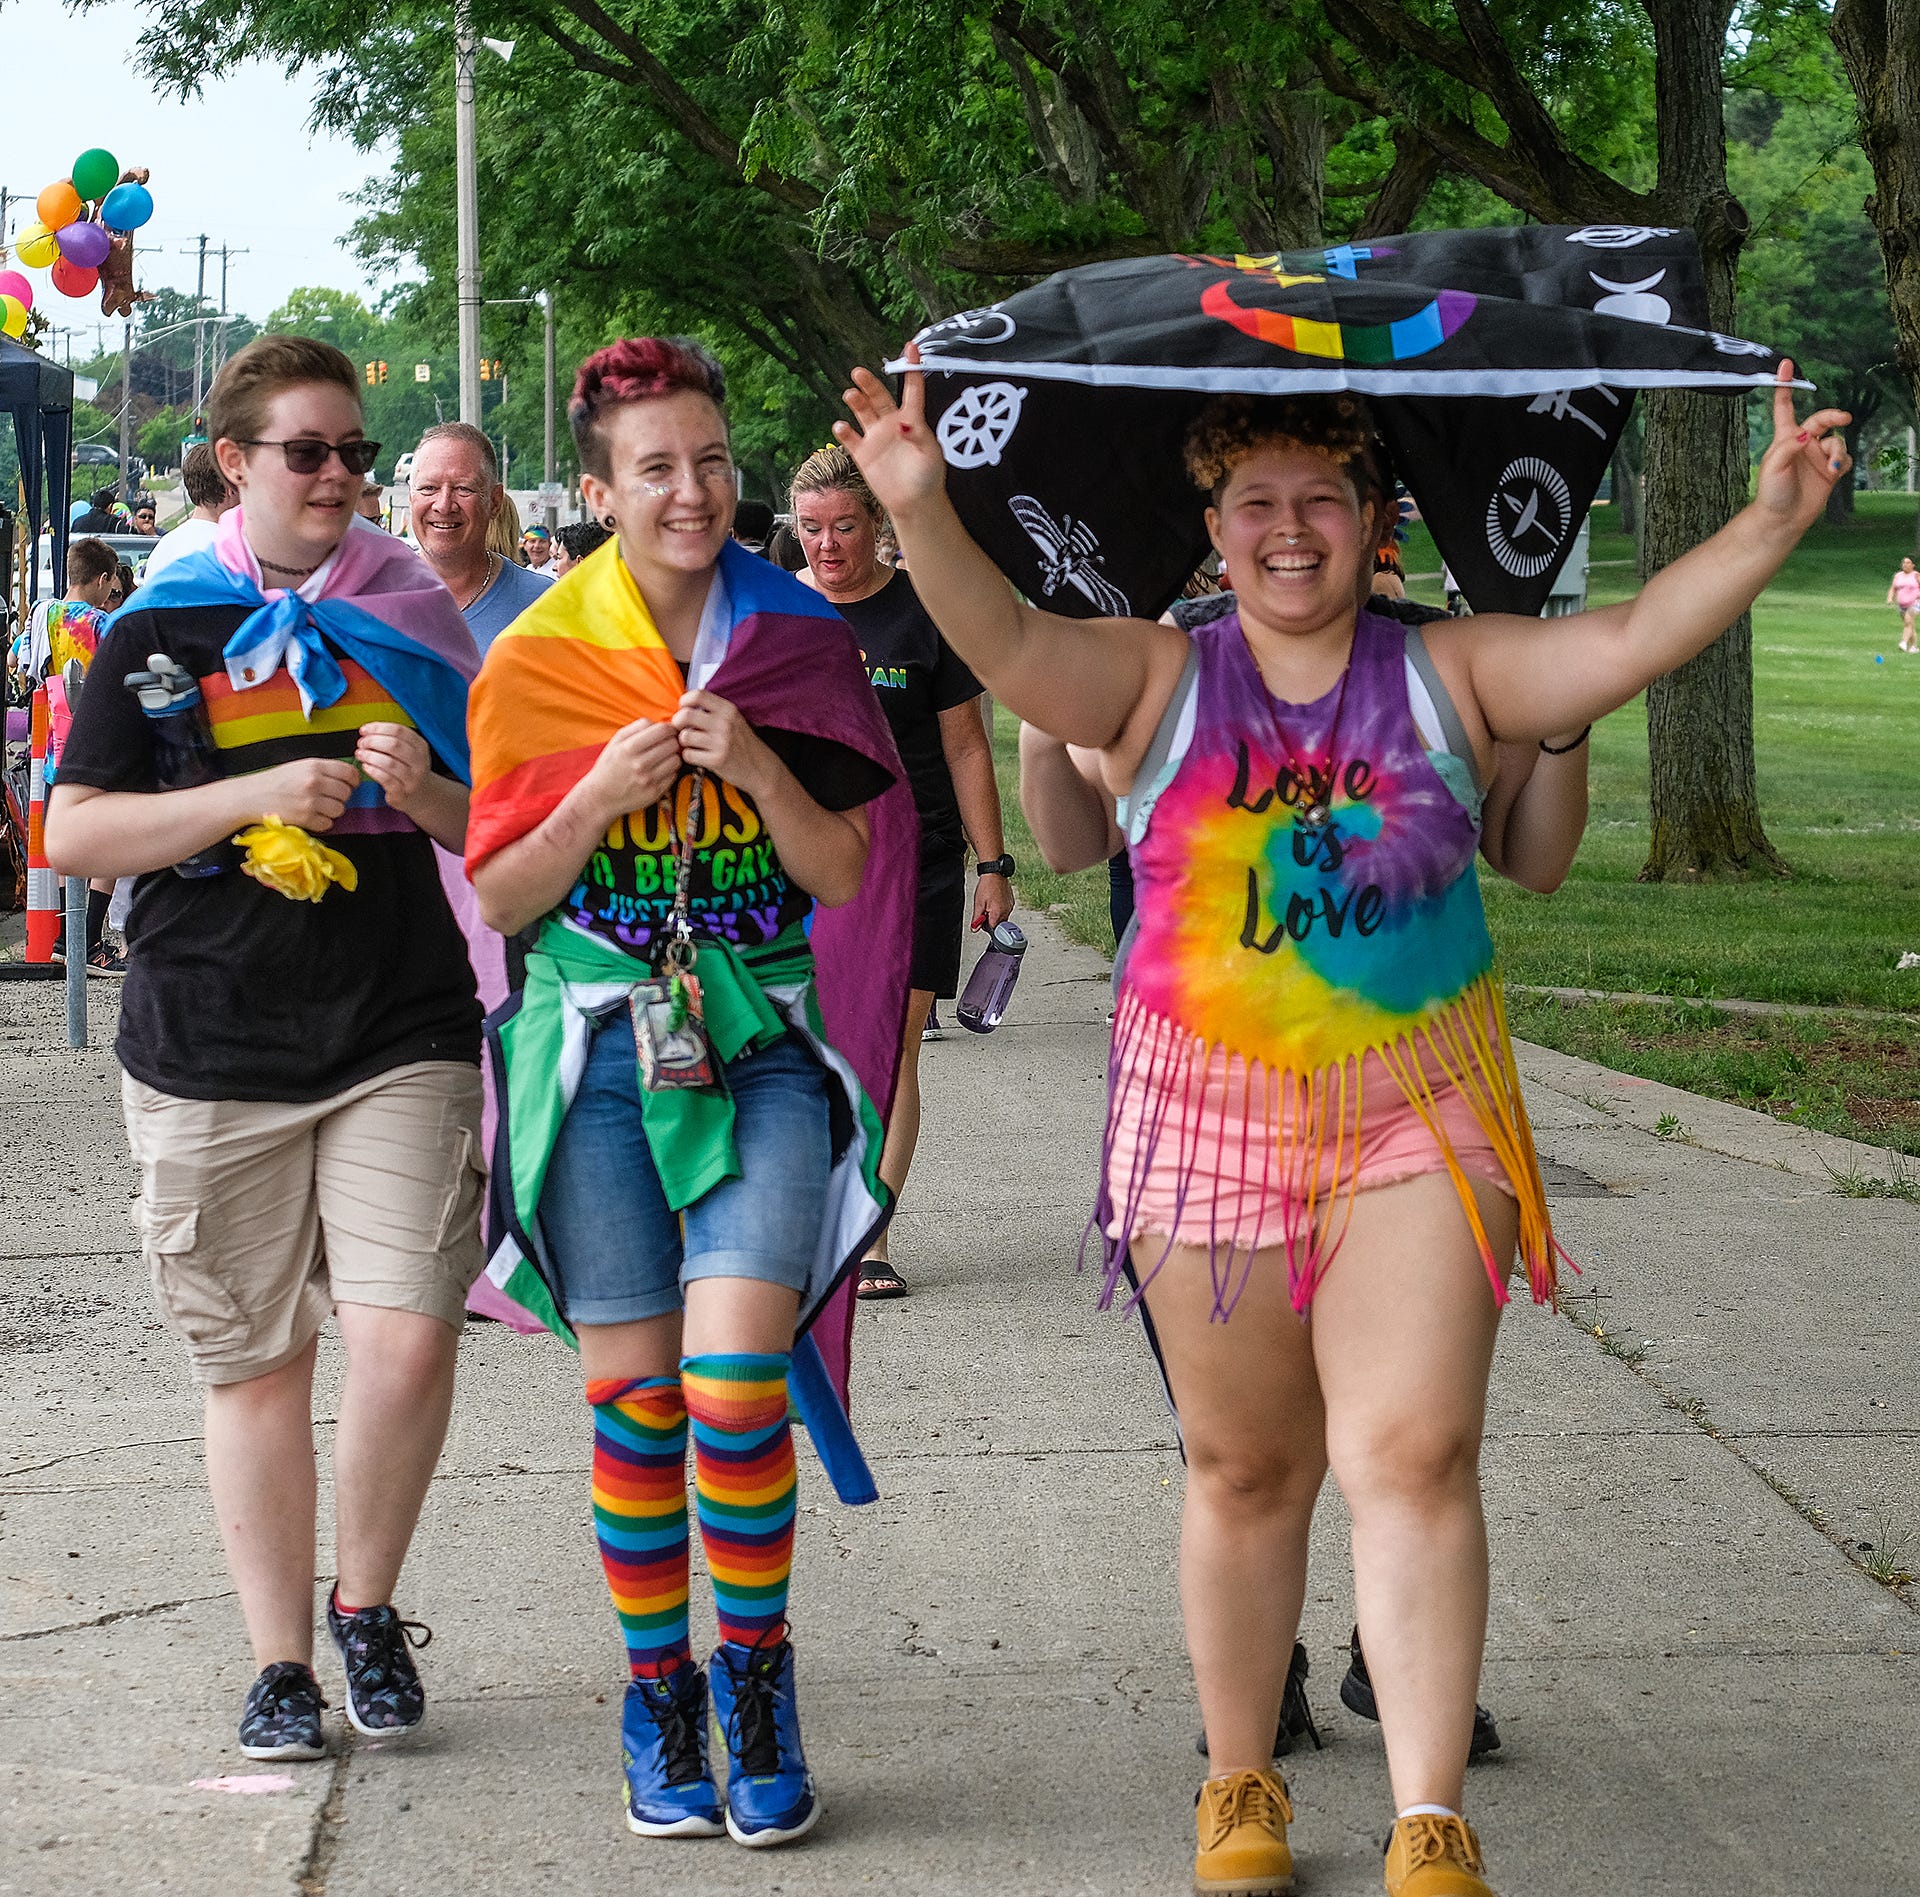 when is the gay pride parade in saginaw michigan